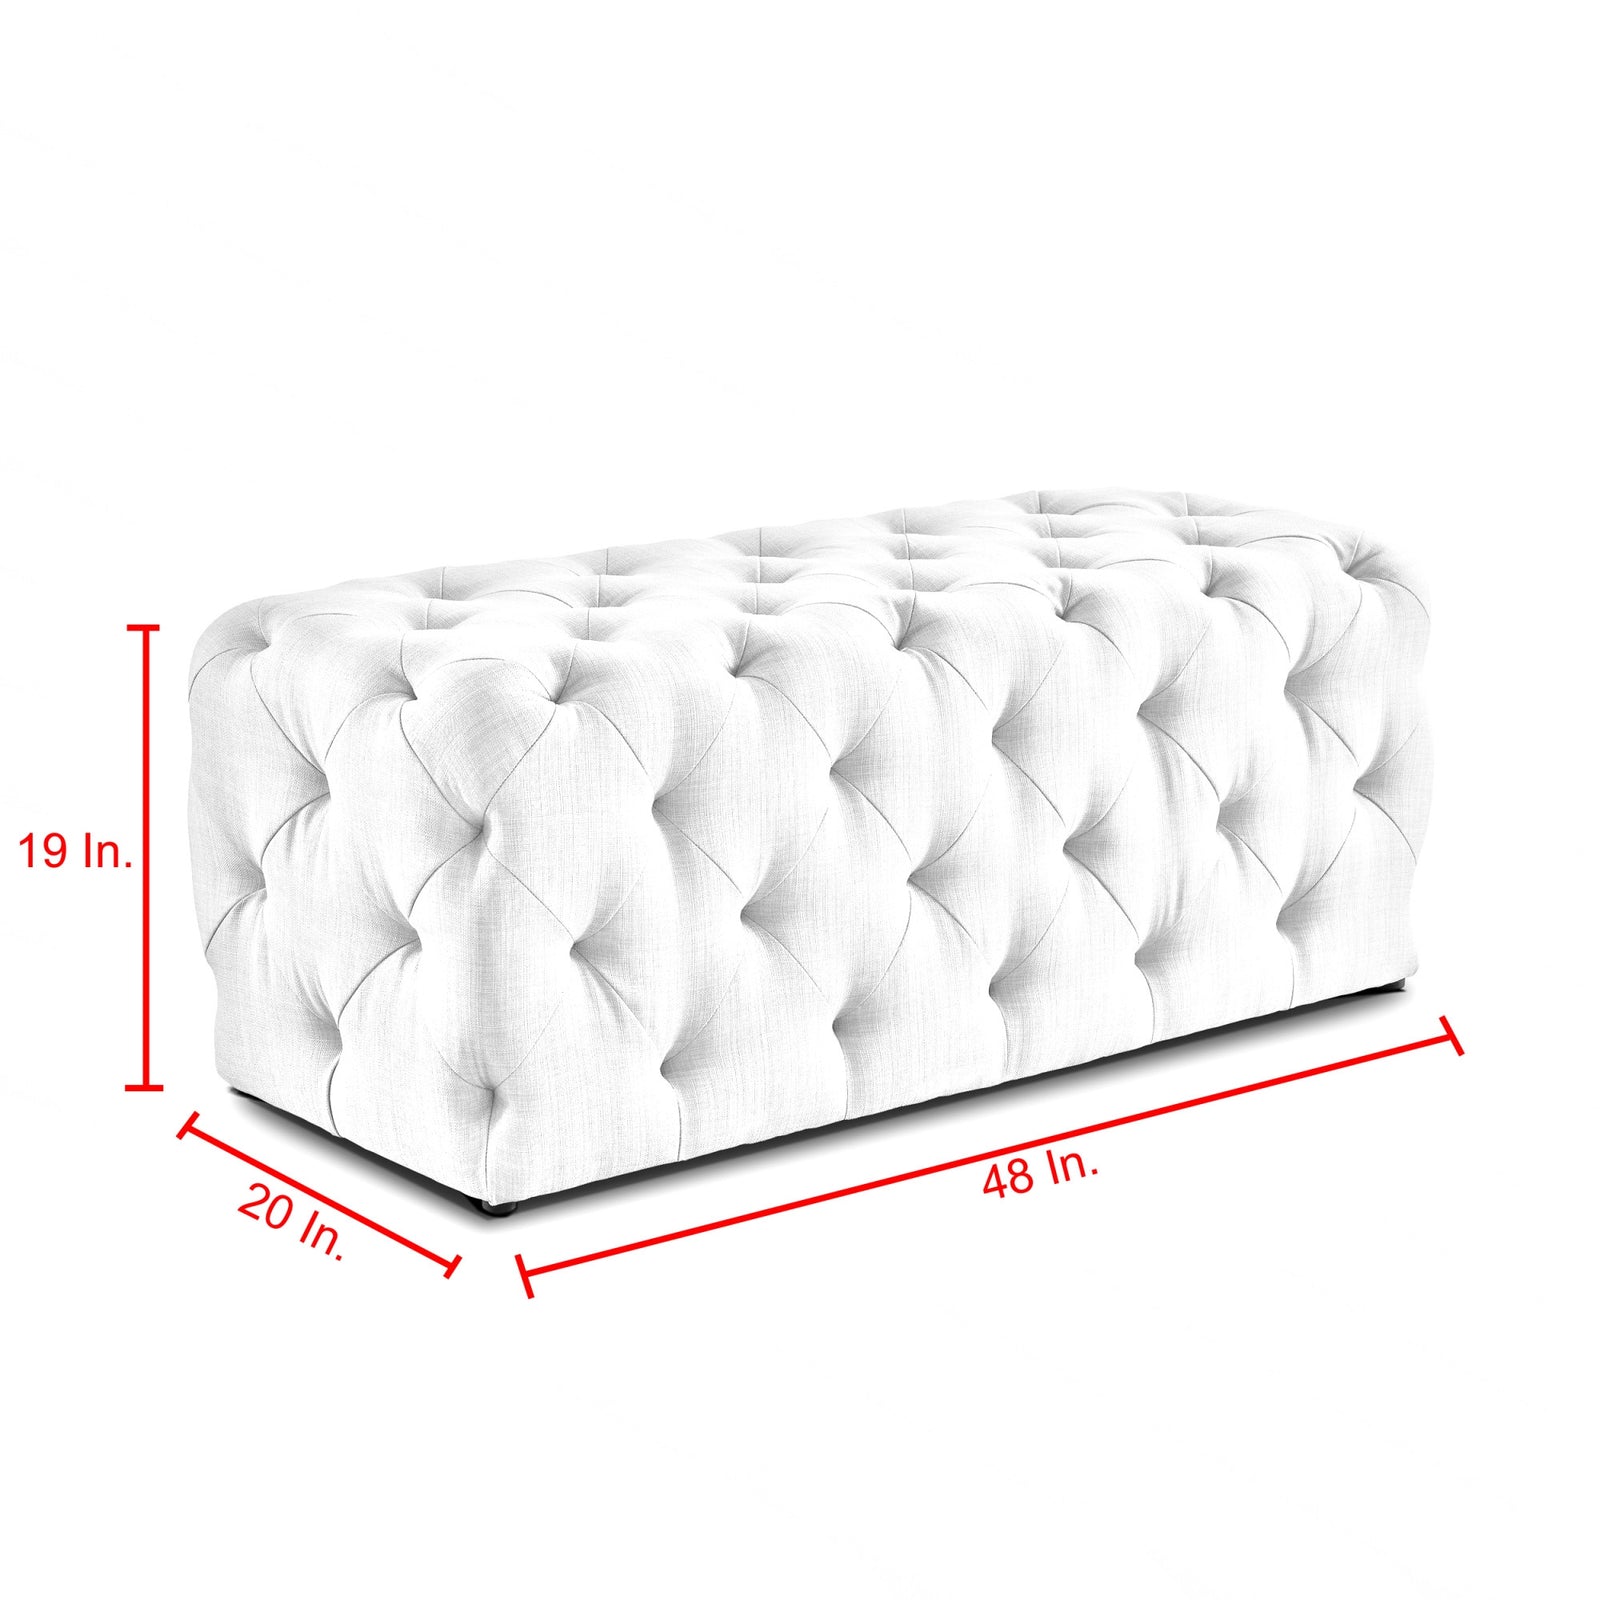 48" Cream And Black Upholstered Linen Bench